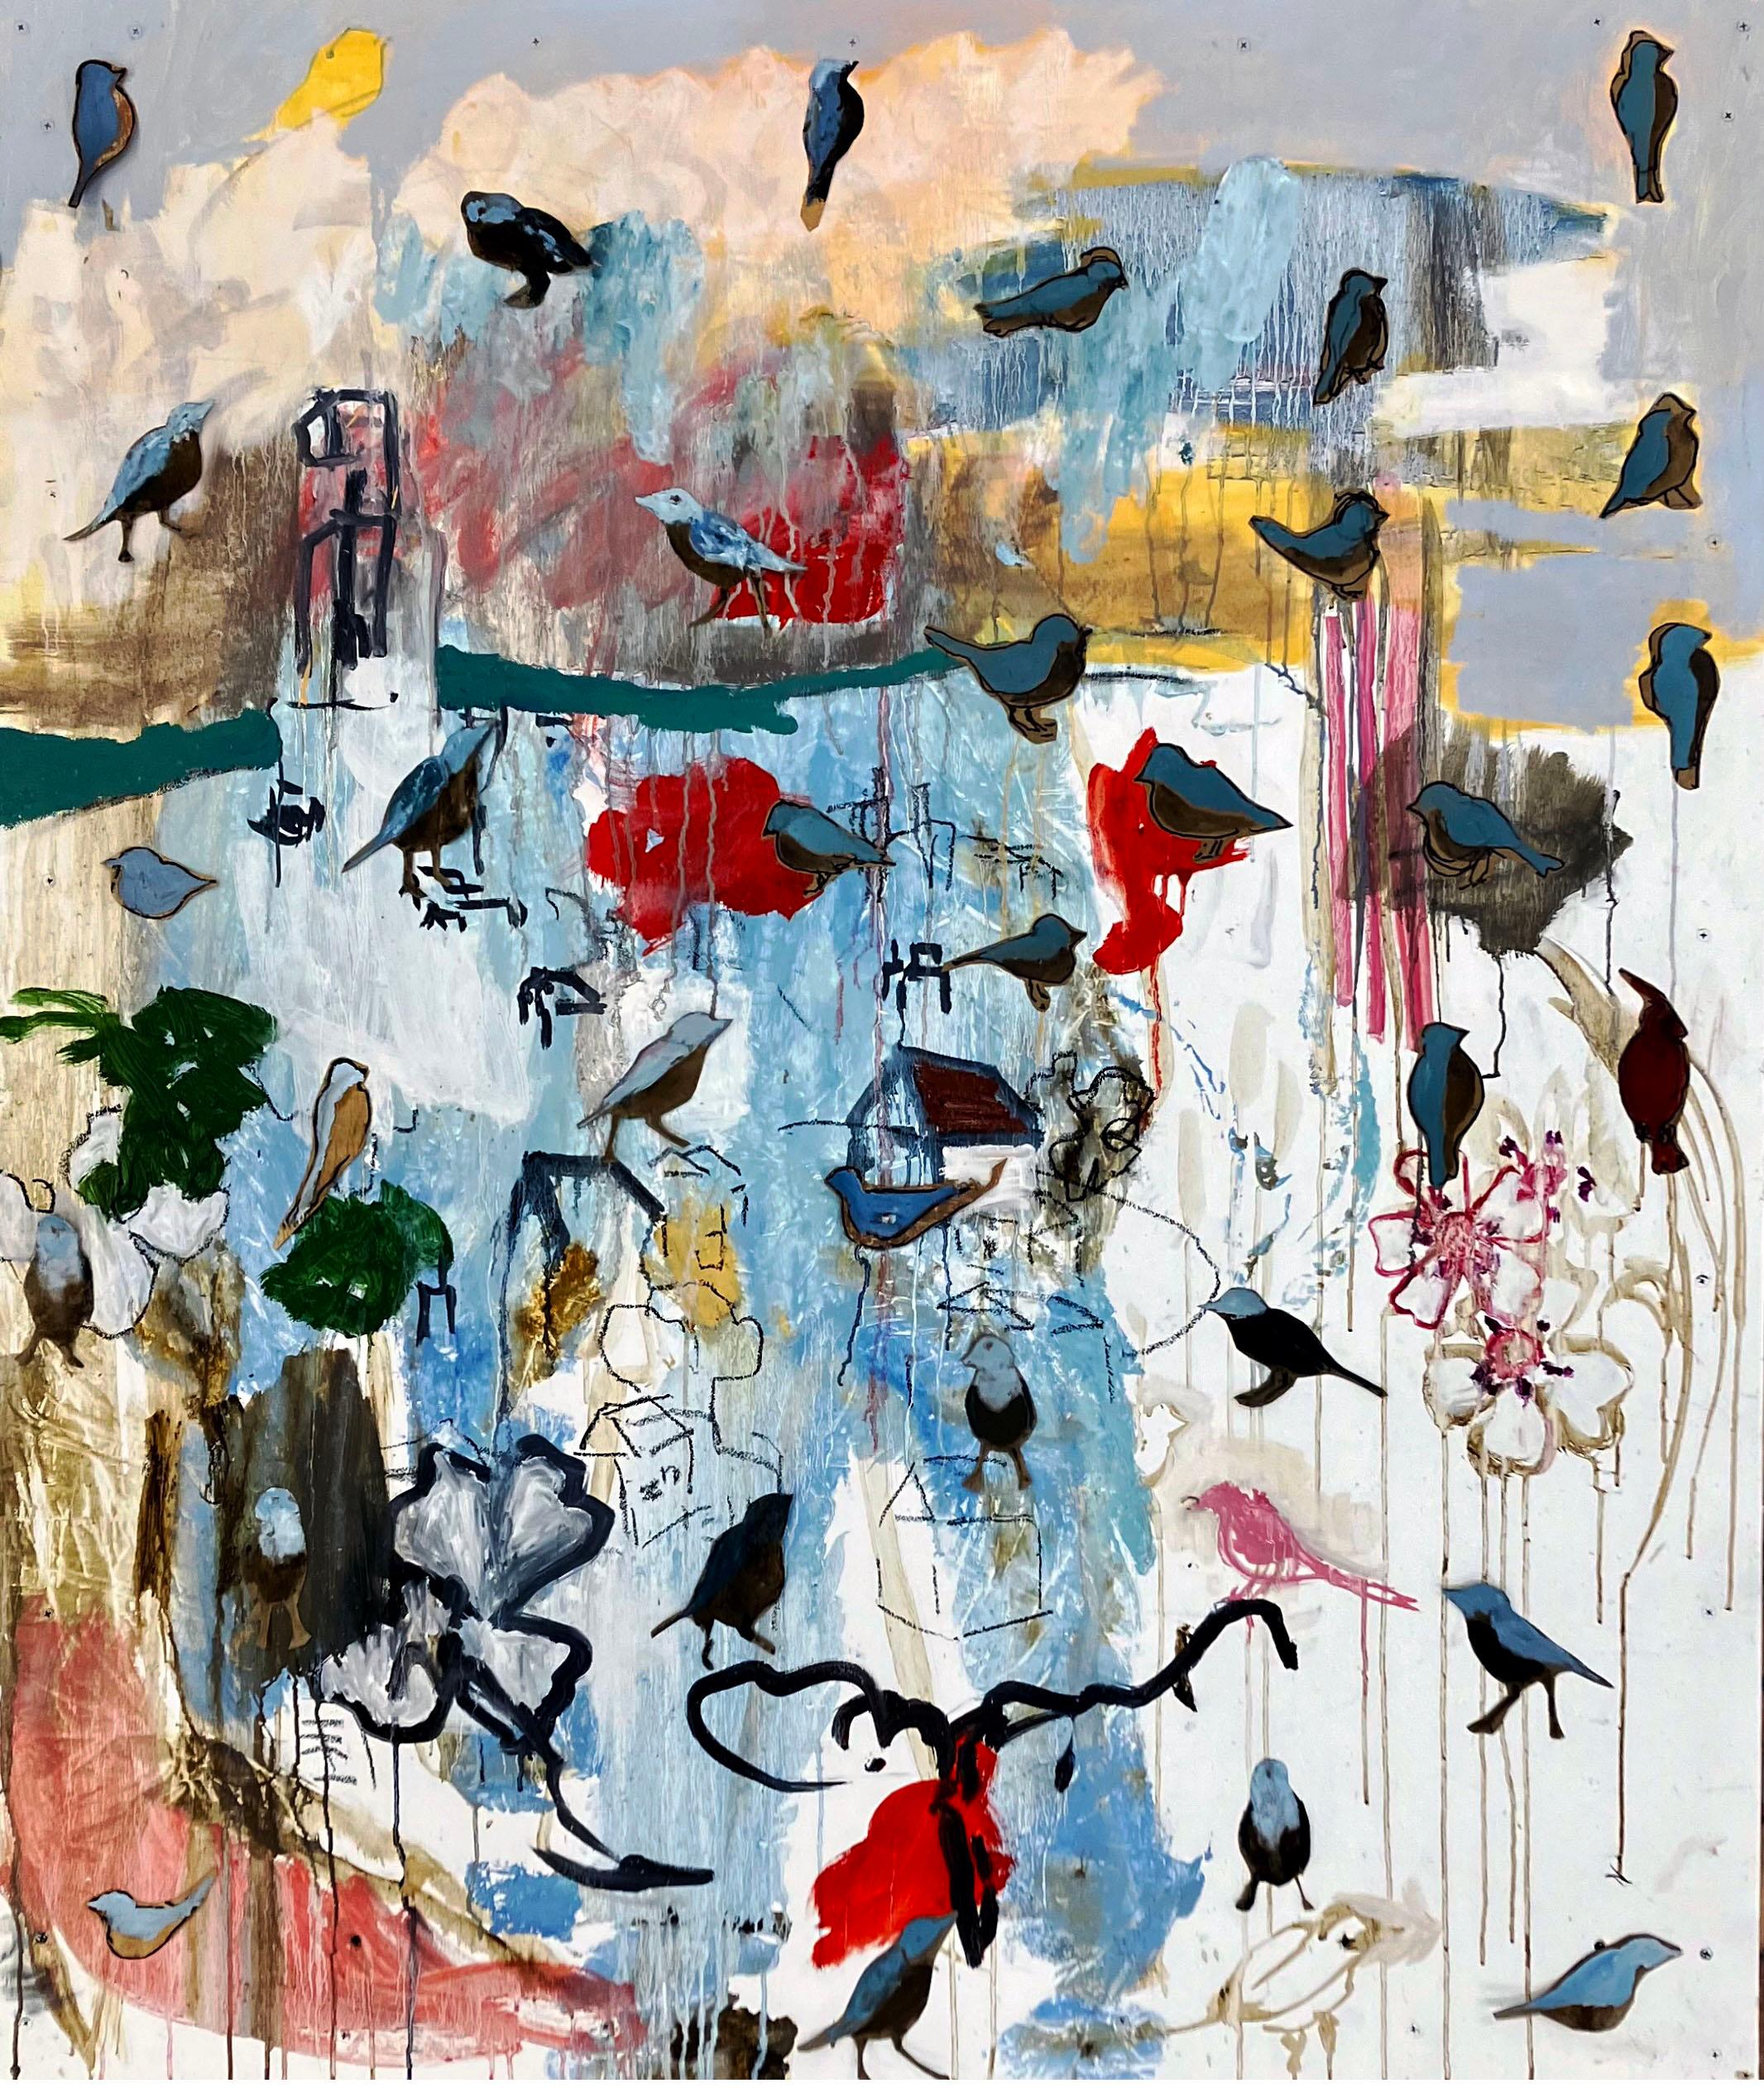 C. Dimitri Landscape Painting – Nessun Dorma (No one sleeps) farbenfrohes abstraktes Gemälde, Vögel, blaue, graue Töne